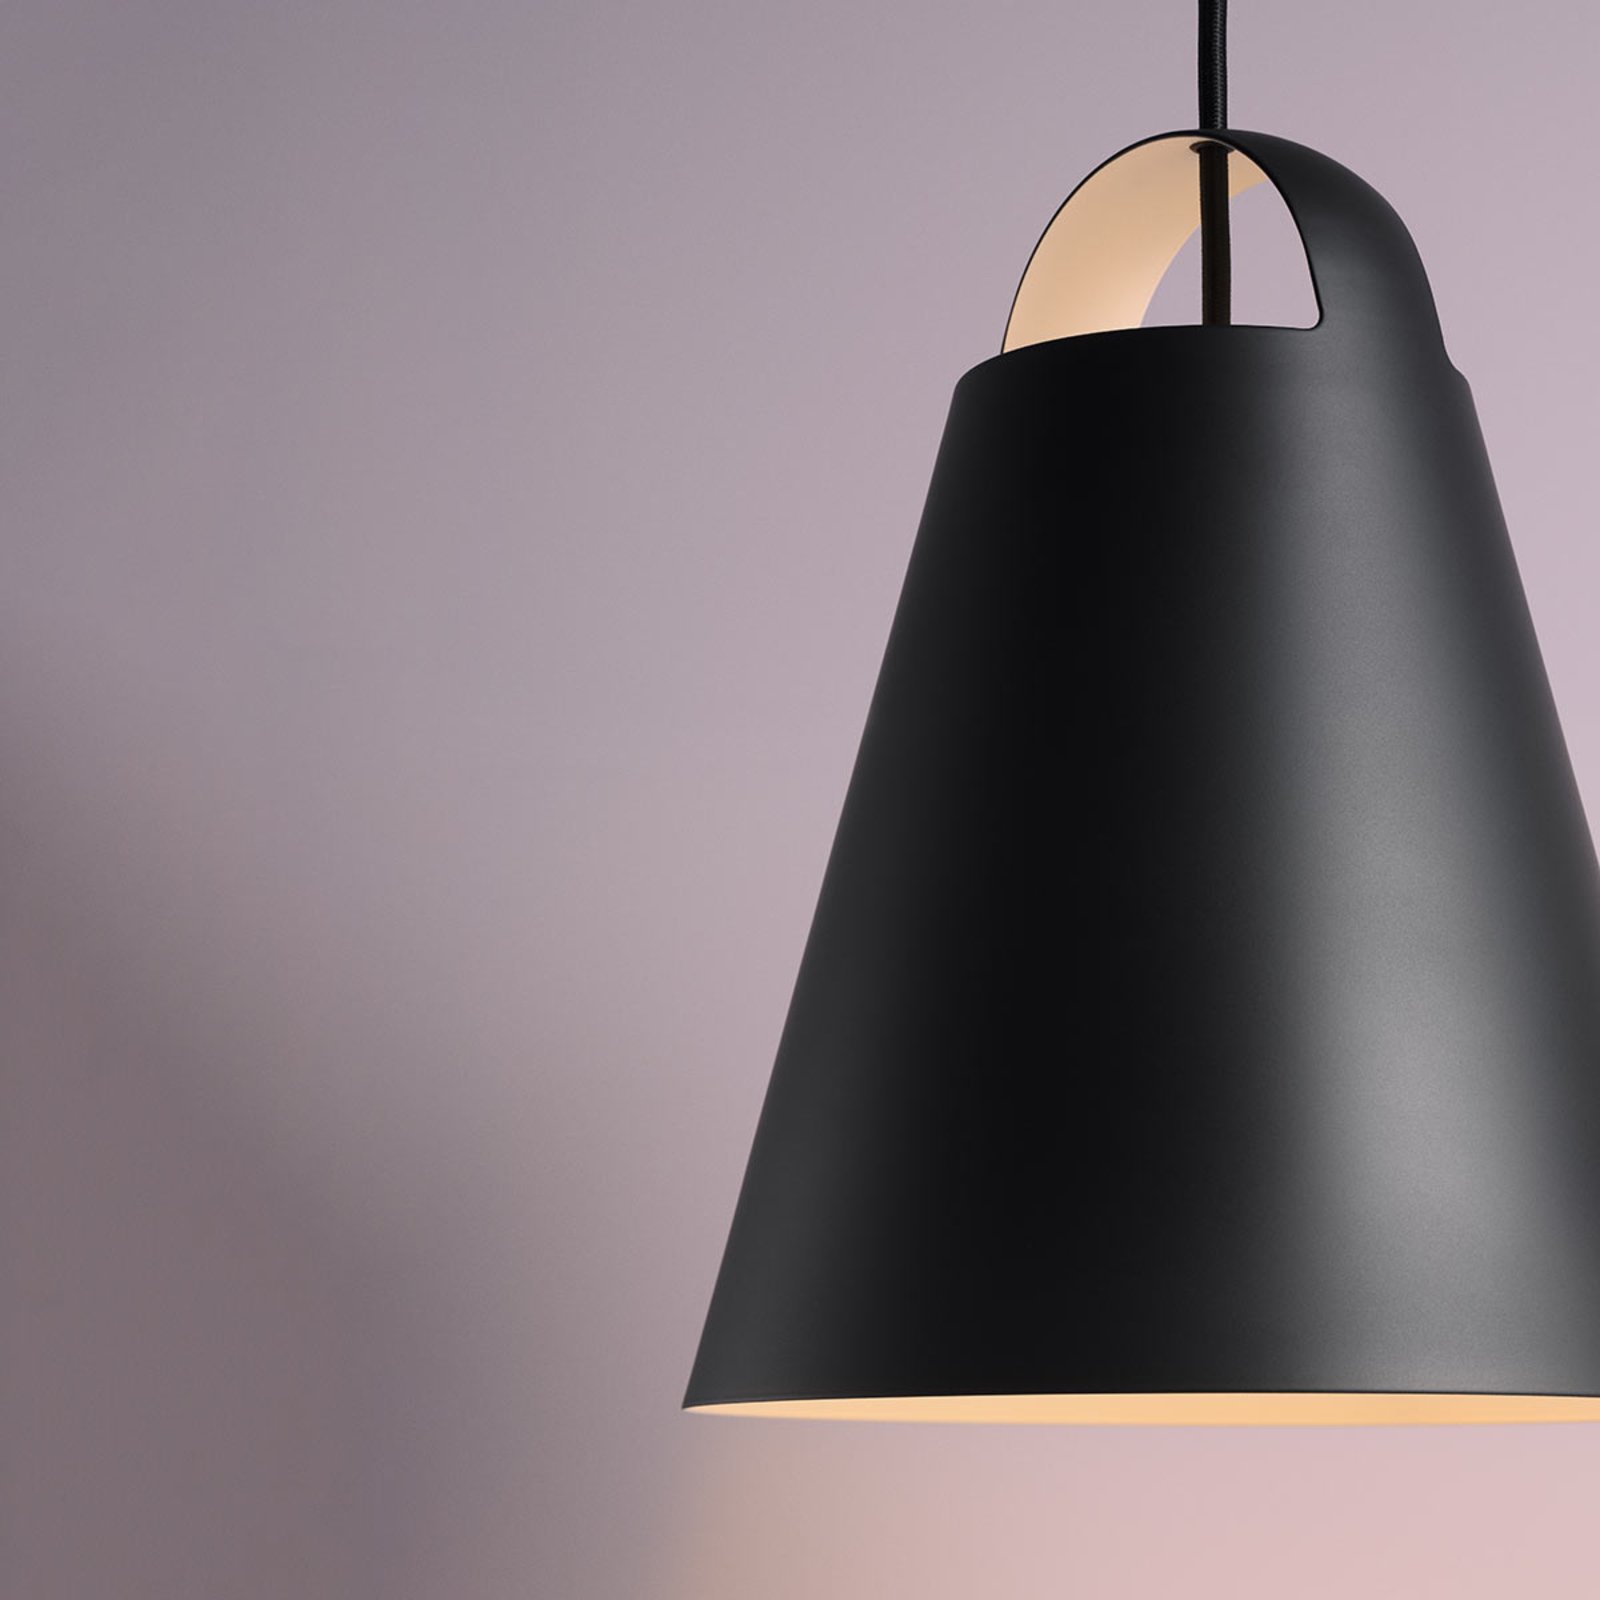 Design hanglamp Above, zwart, 17,5 cm